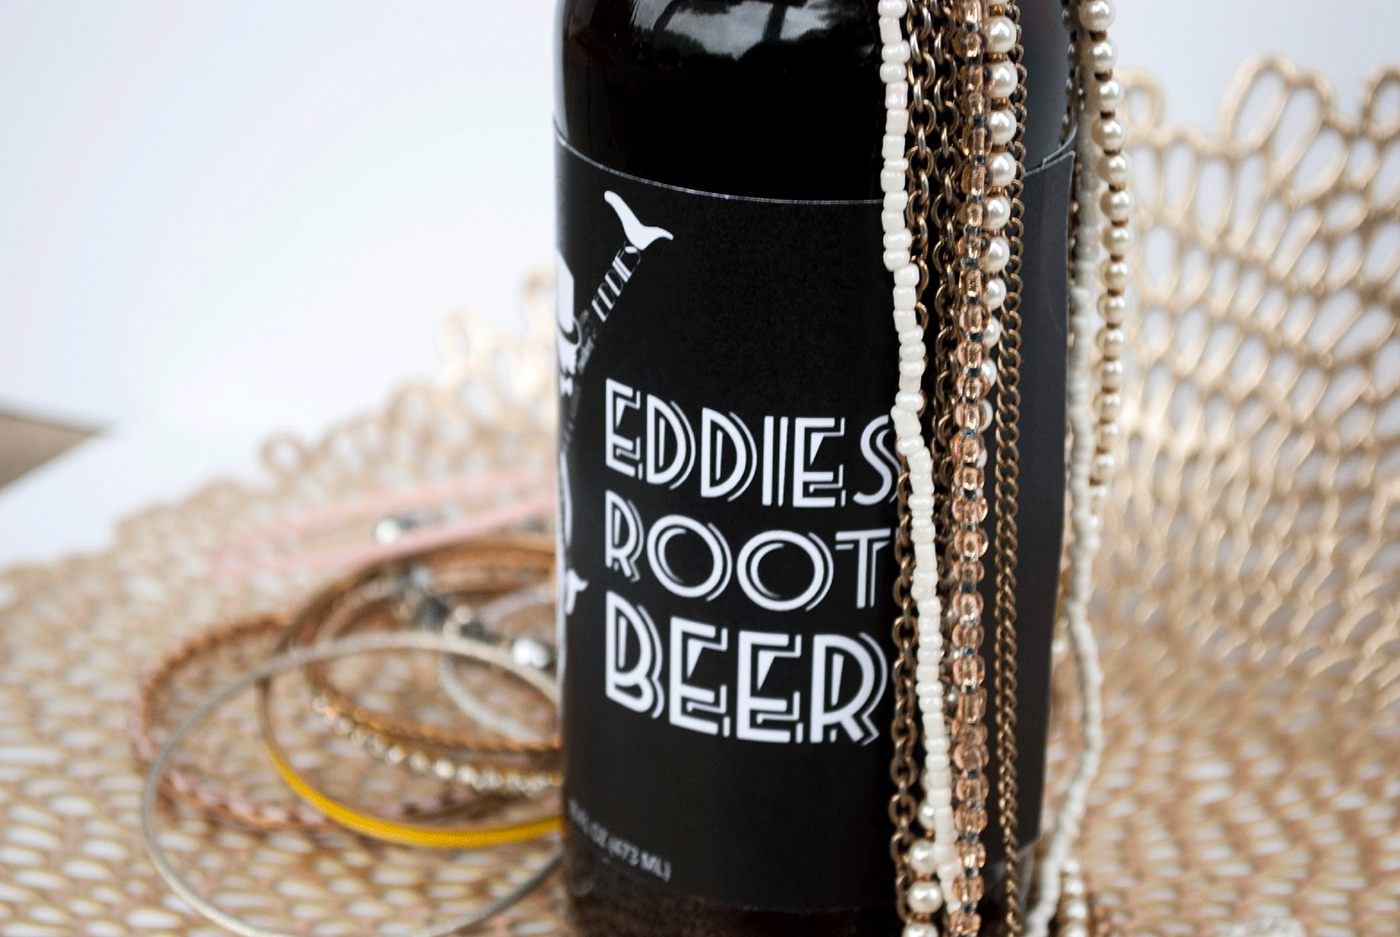 Packaging root beer bottle design